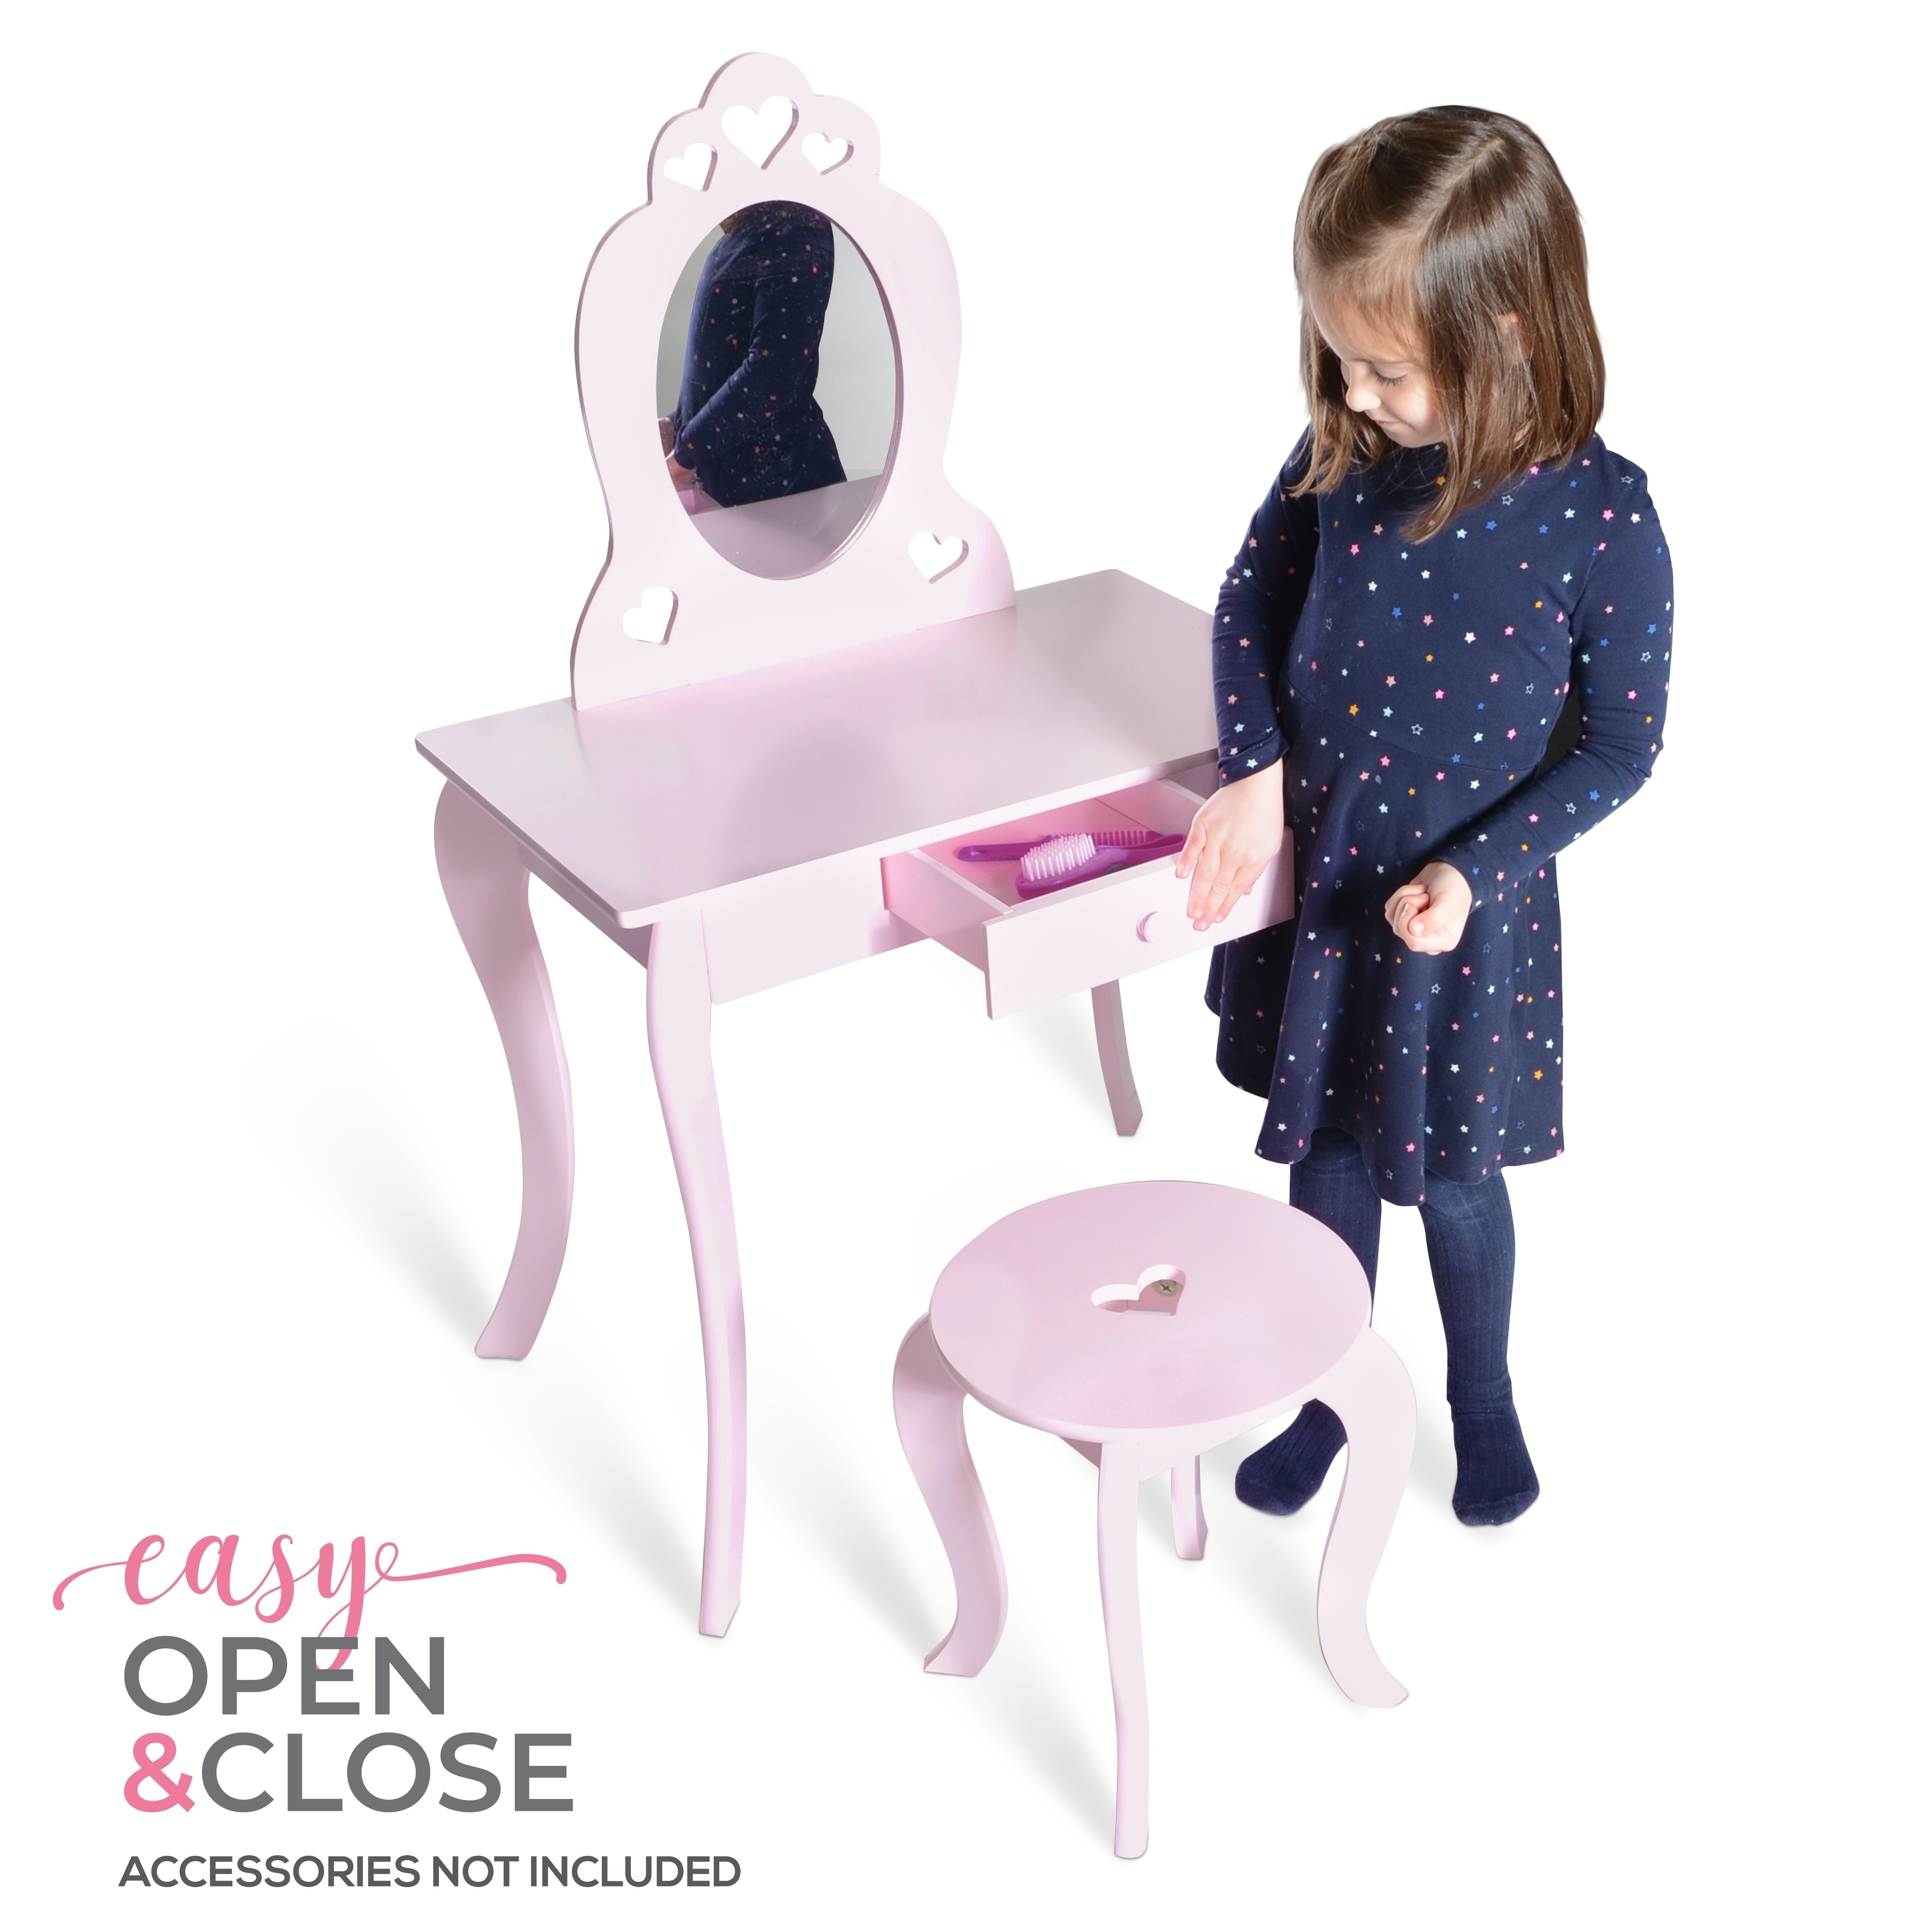 children's play vanity table